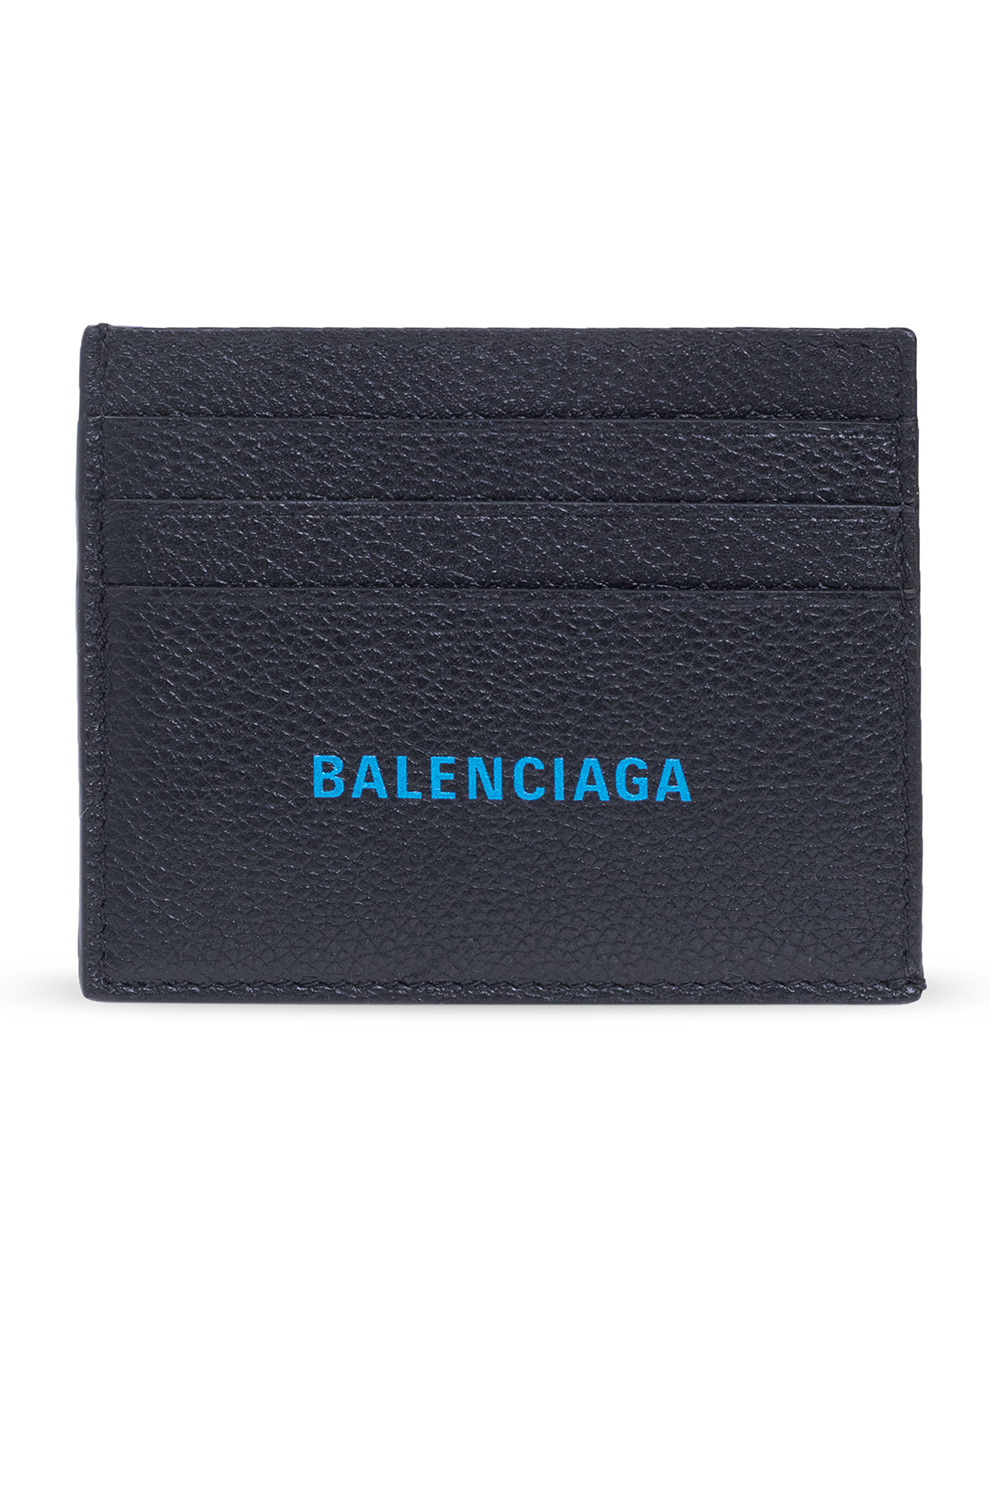 Balenciaga APRÈS SKI - FASHION FOR SPECIAL TASKS